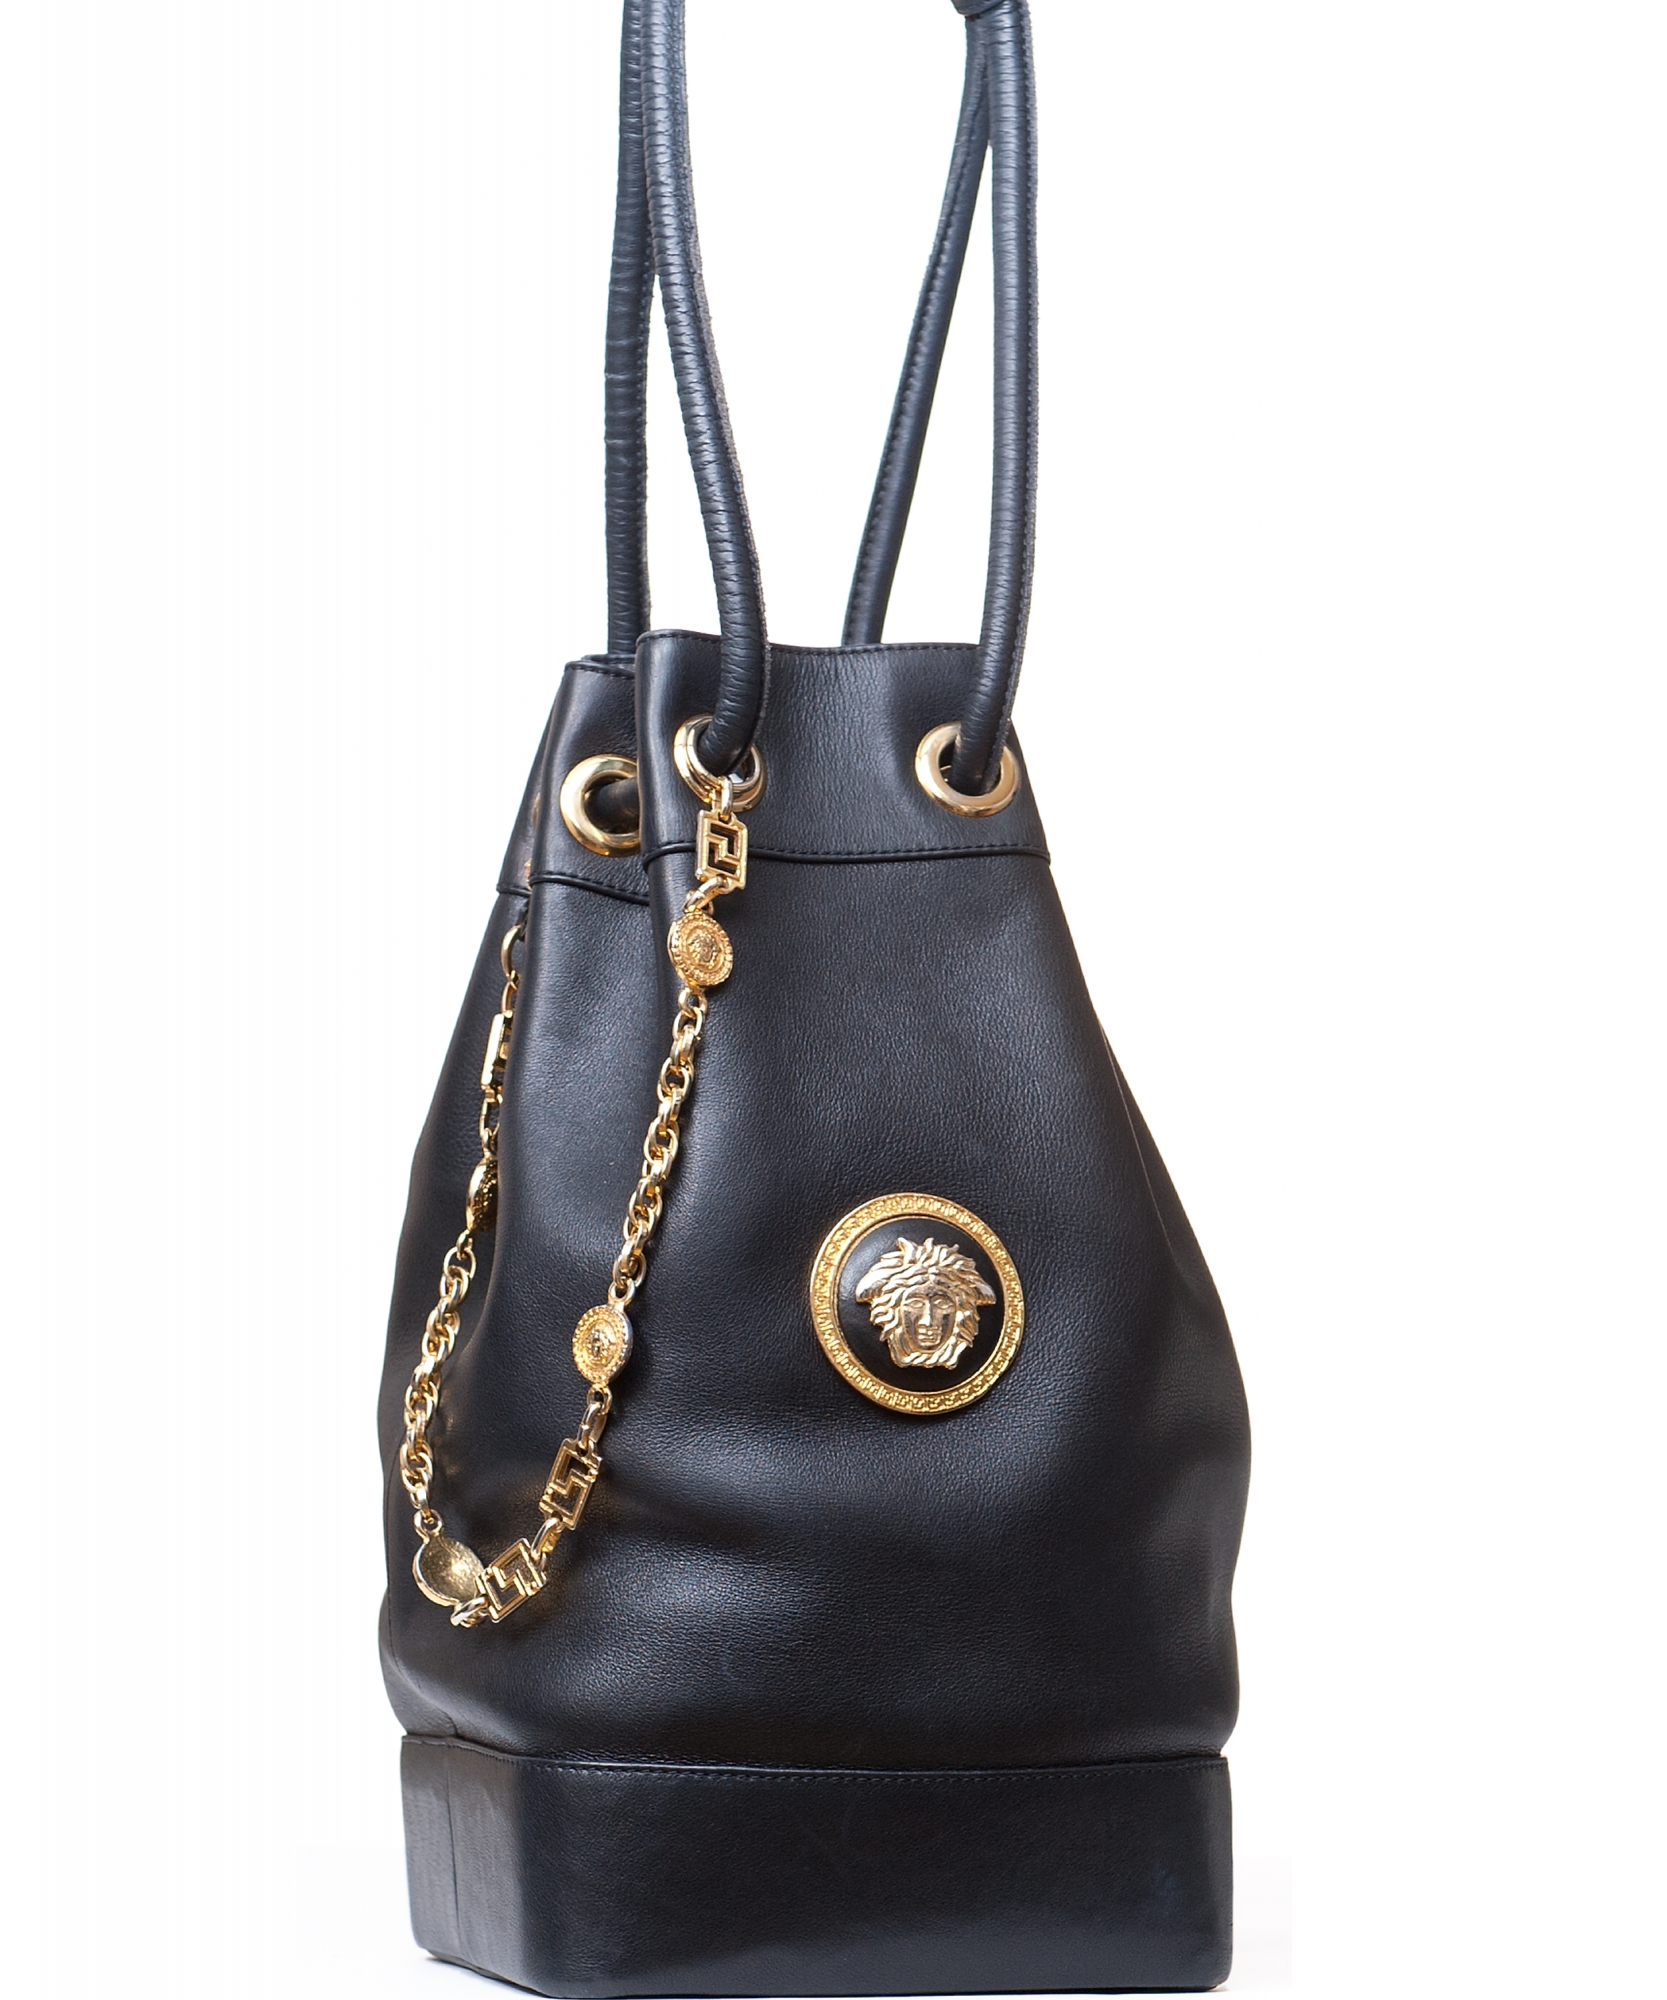 Gianni Versace Black Leather Medusa Bag